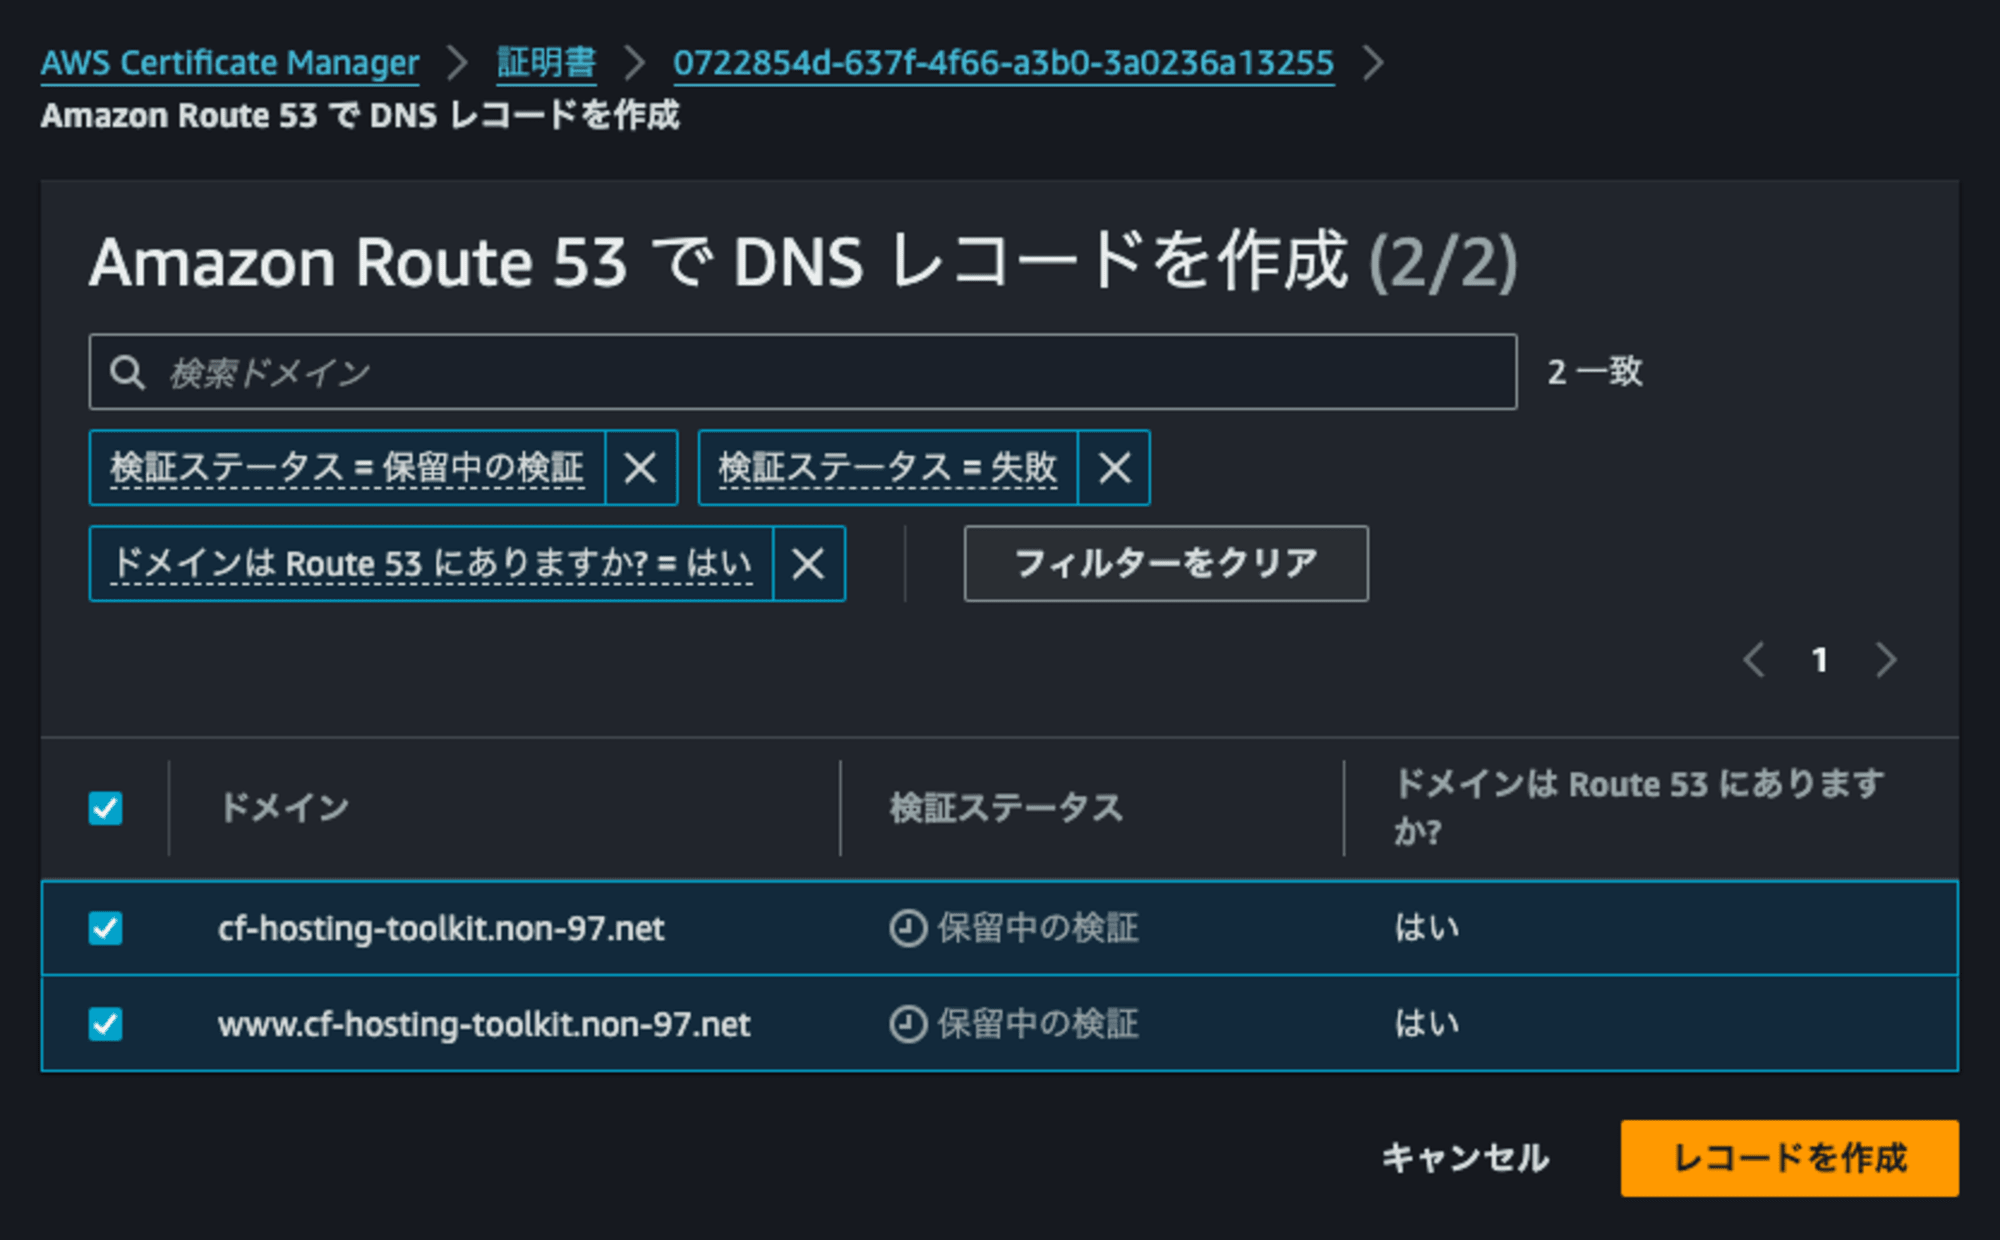 34.Amazon Route 53 で DNS レコードを作成